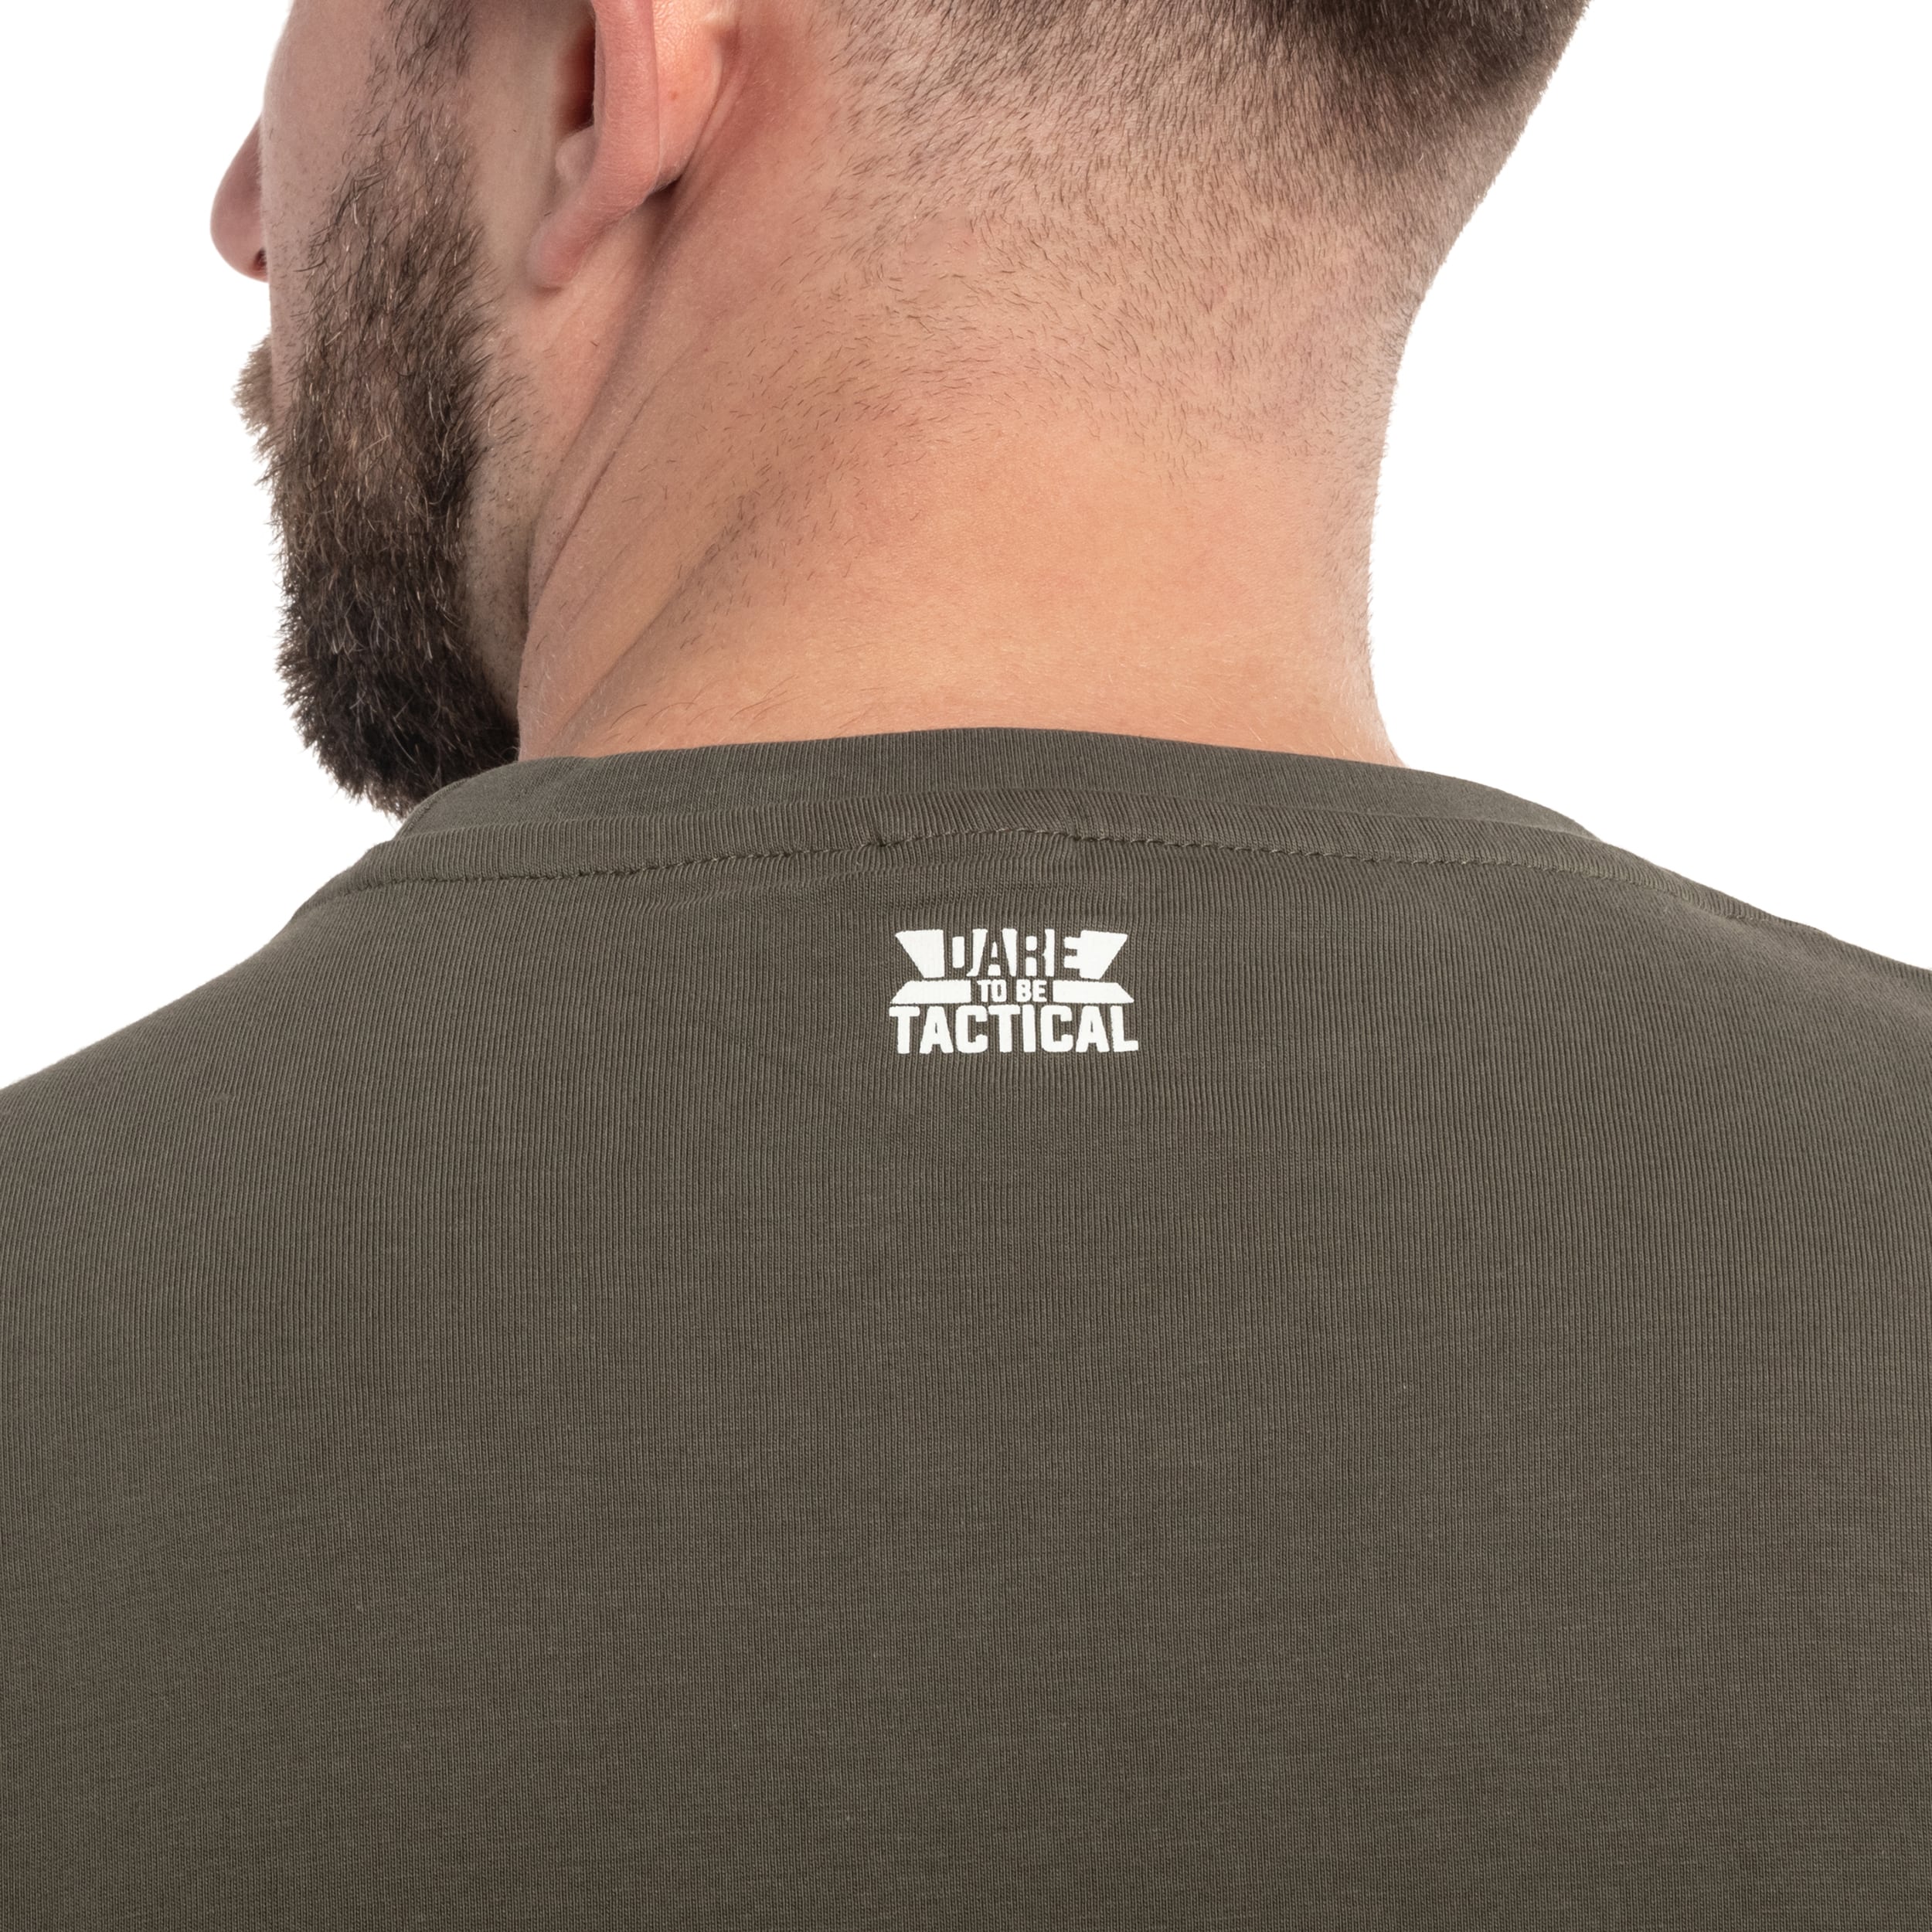 Koszulka T-shirt Pentagon Vertical - Olive